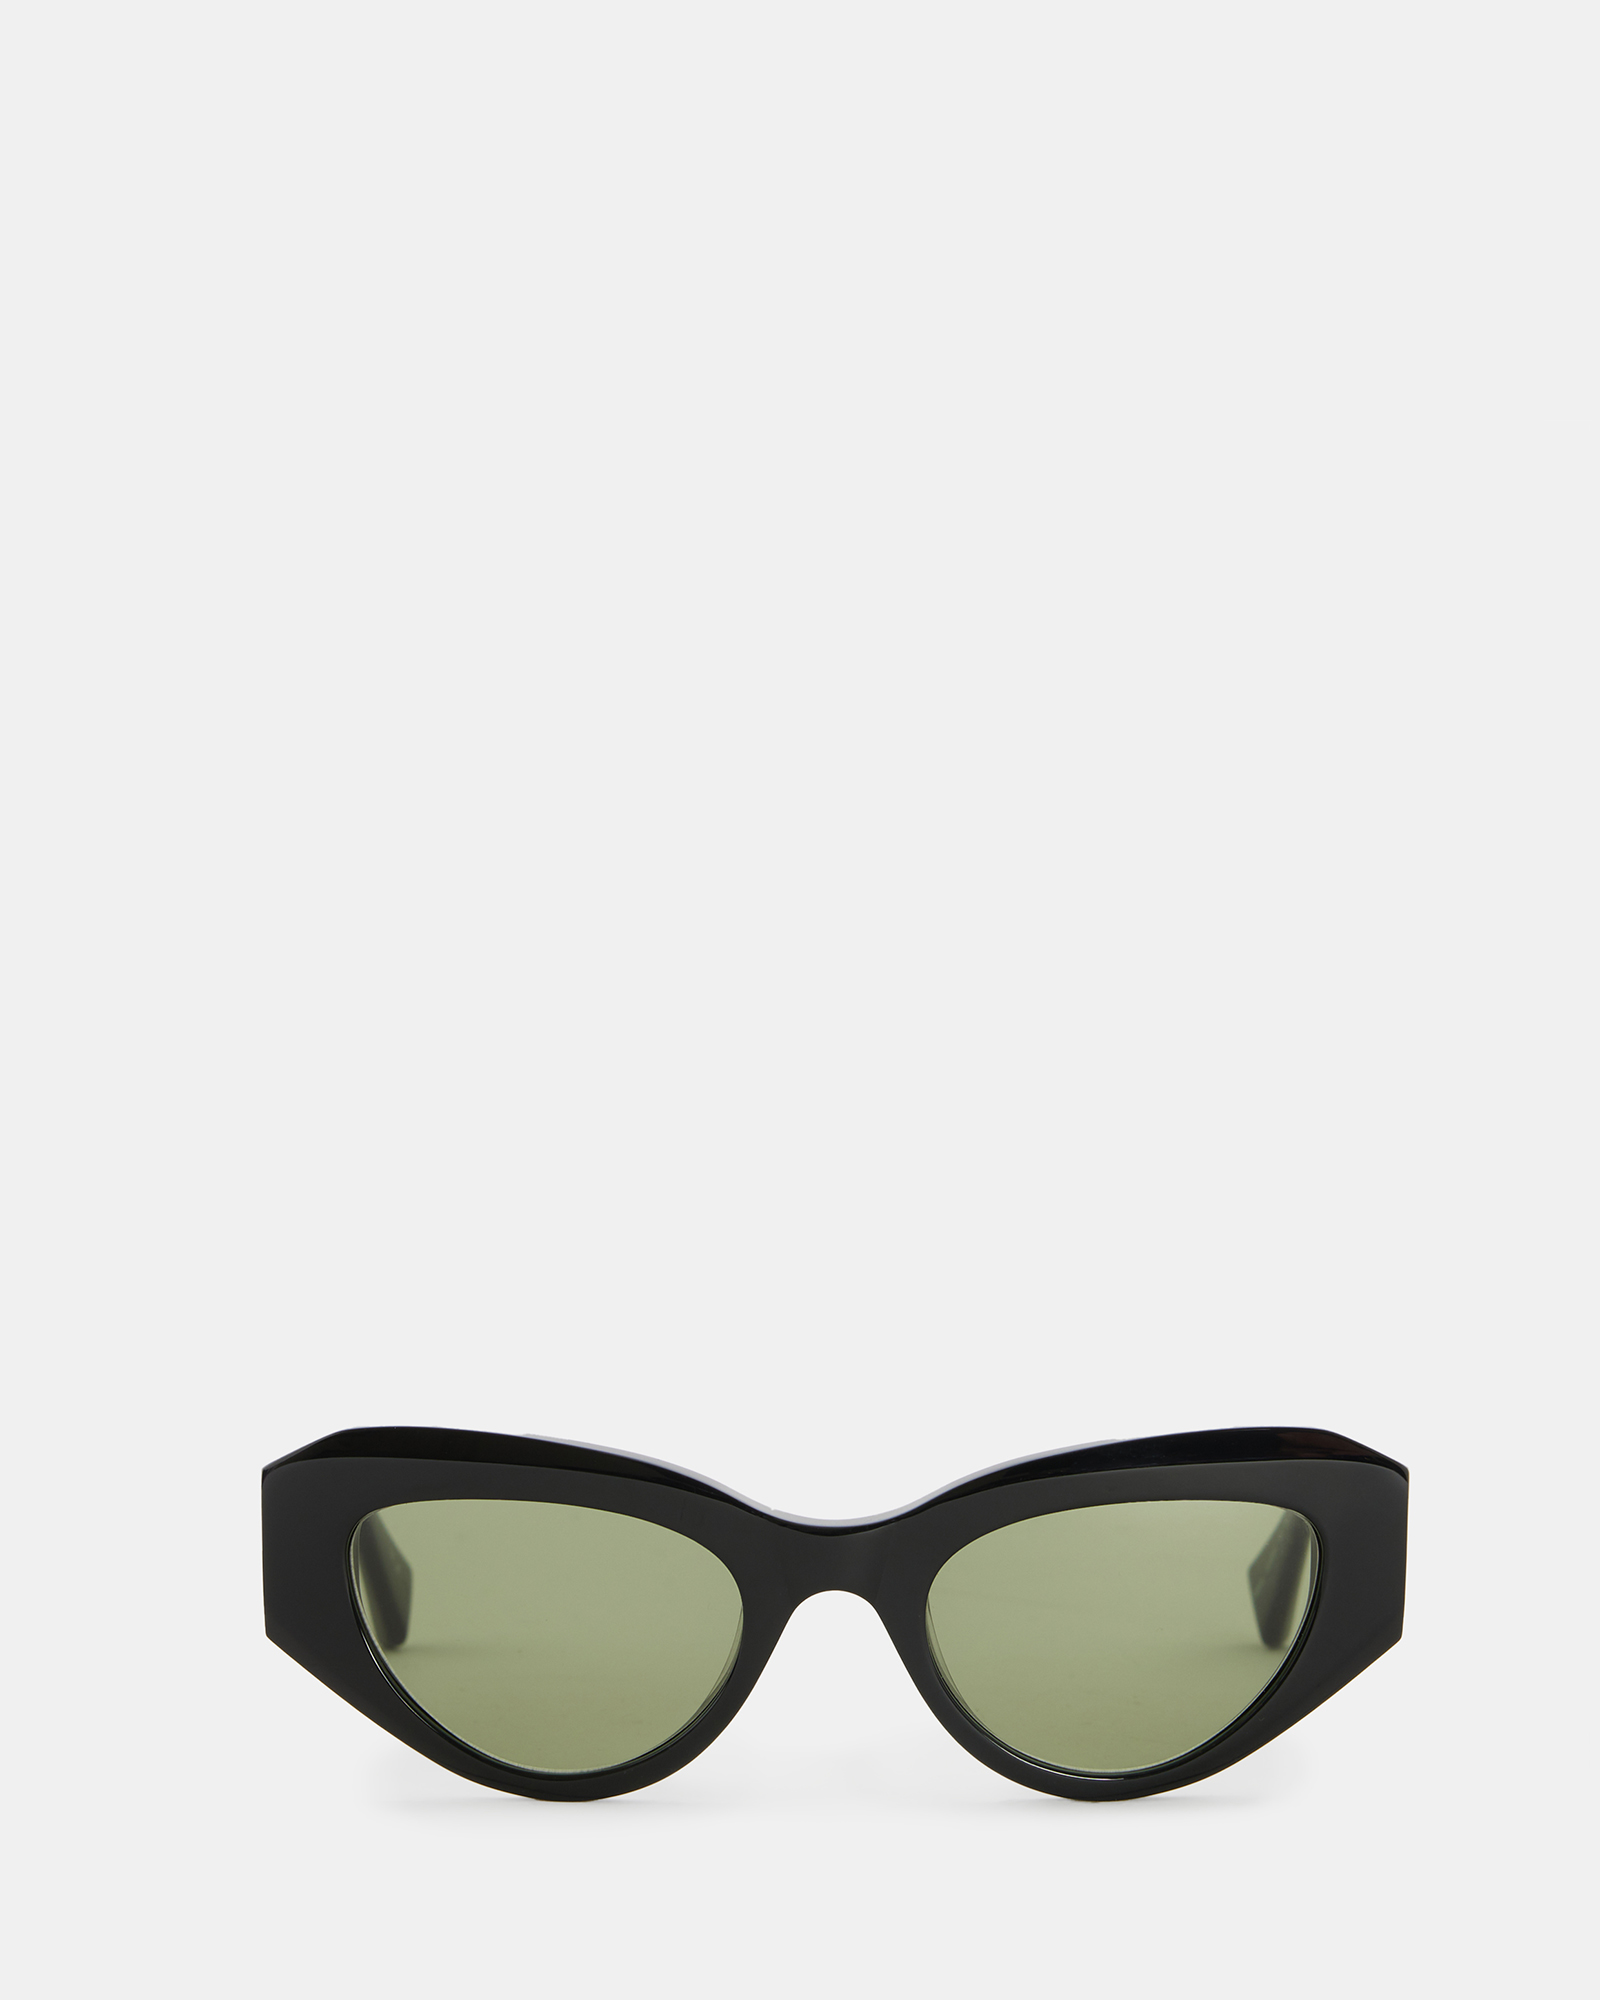 AllSaints Calypso Bevelled Cat Eye Sunglasses,, Black, Size: One Size